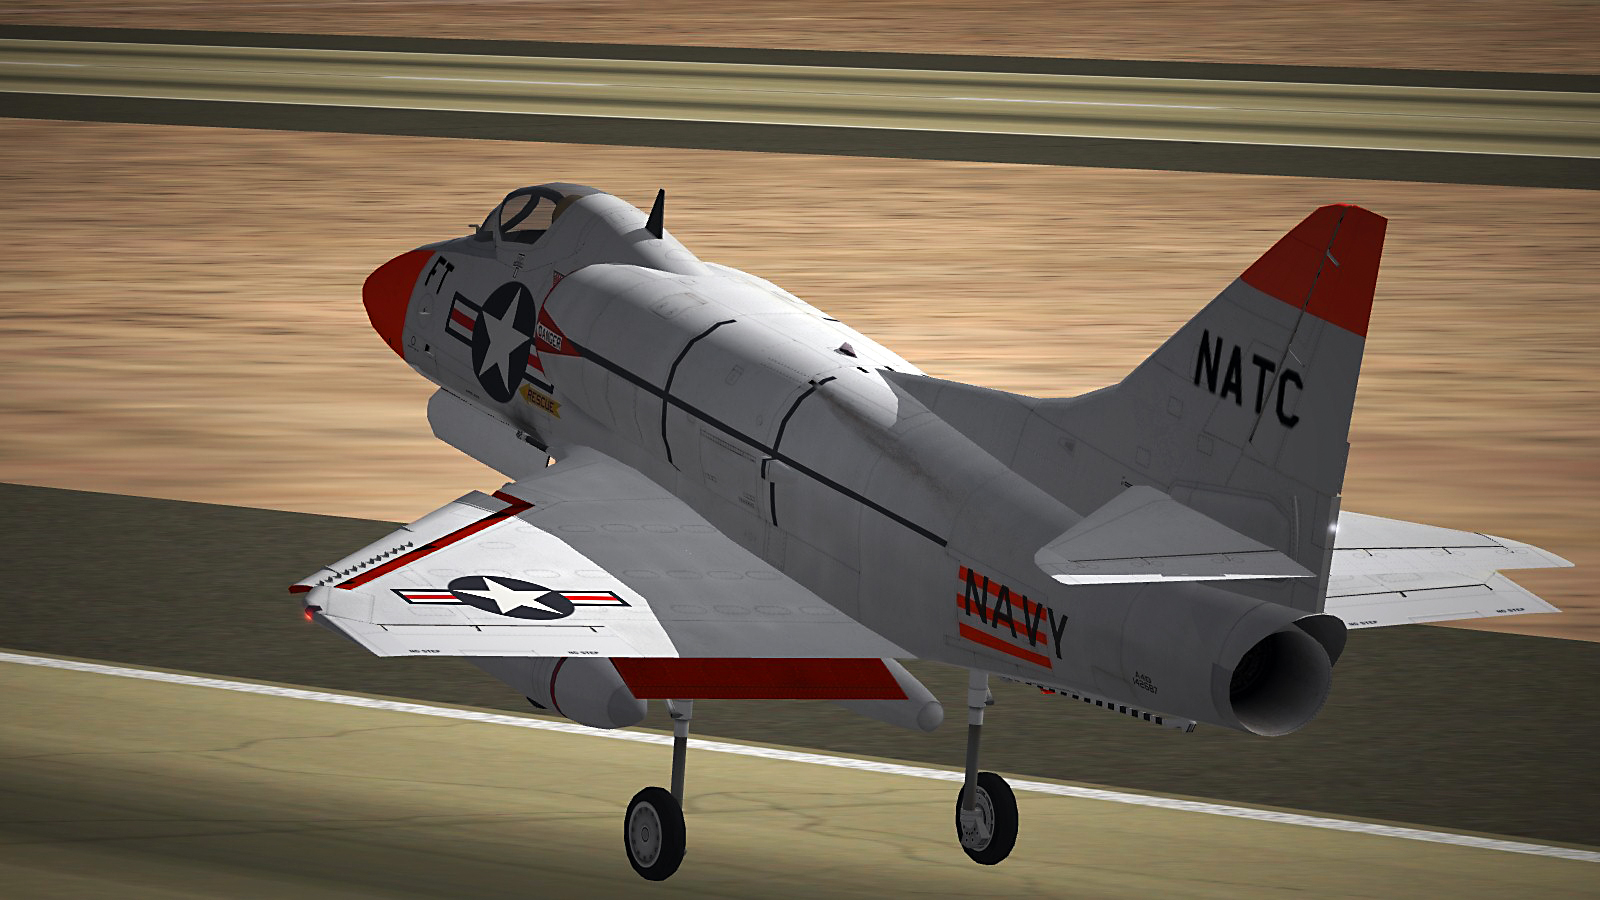 NATC A4D (A-4A) Skyhawk